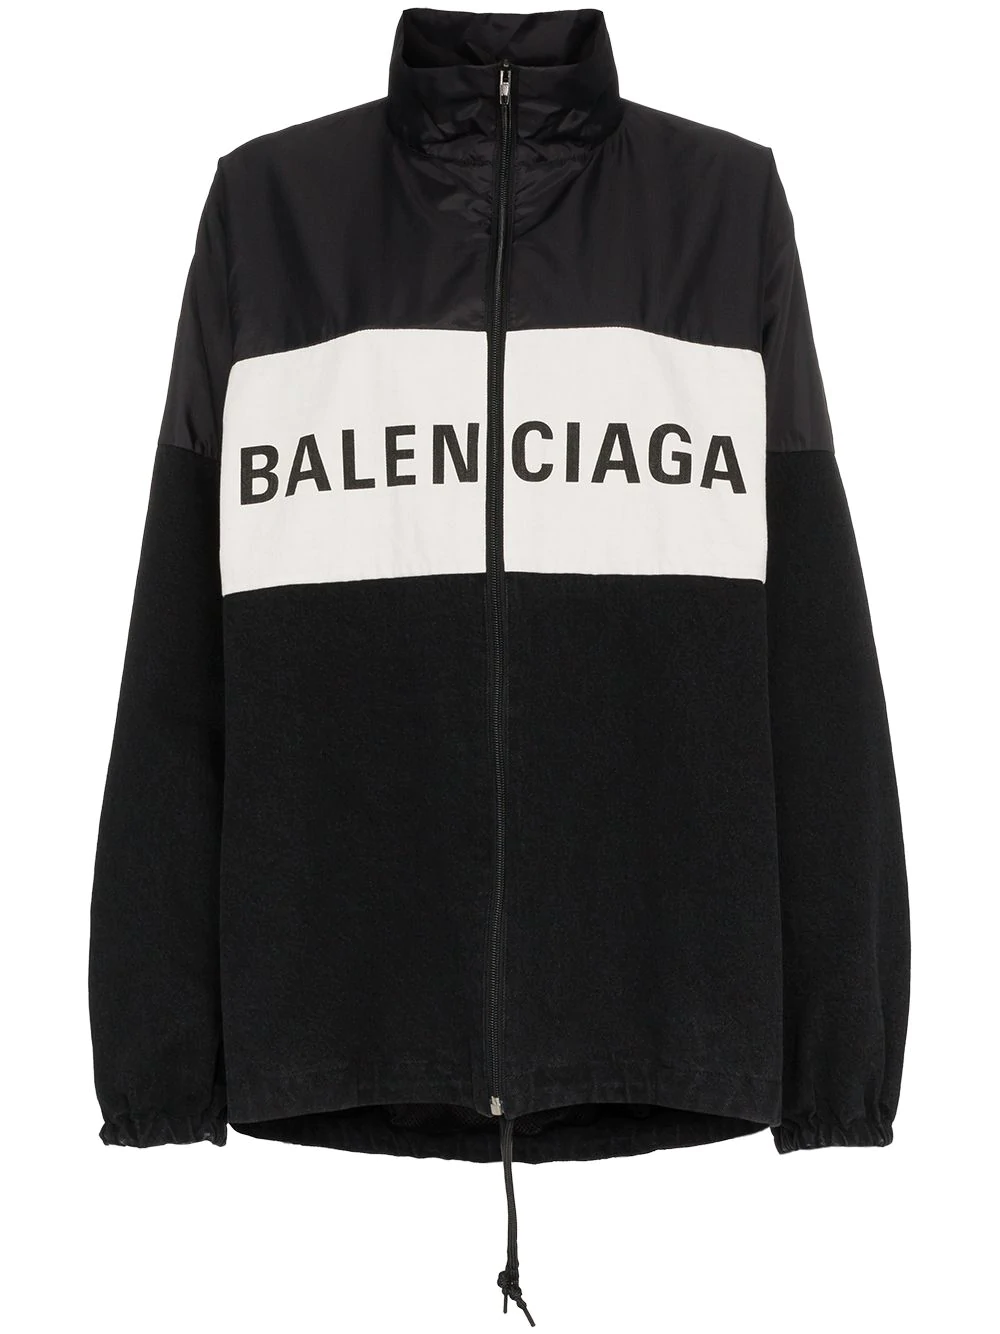 Balenciaga front logo sports jacket